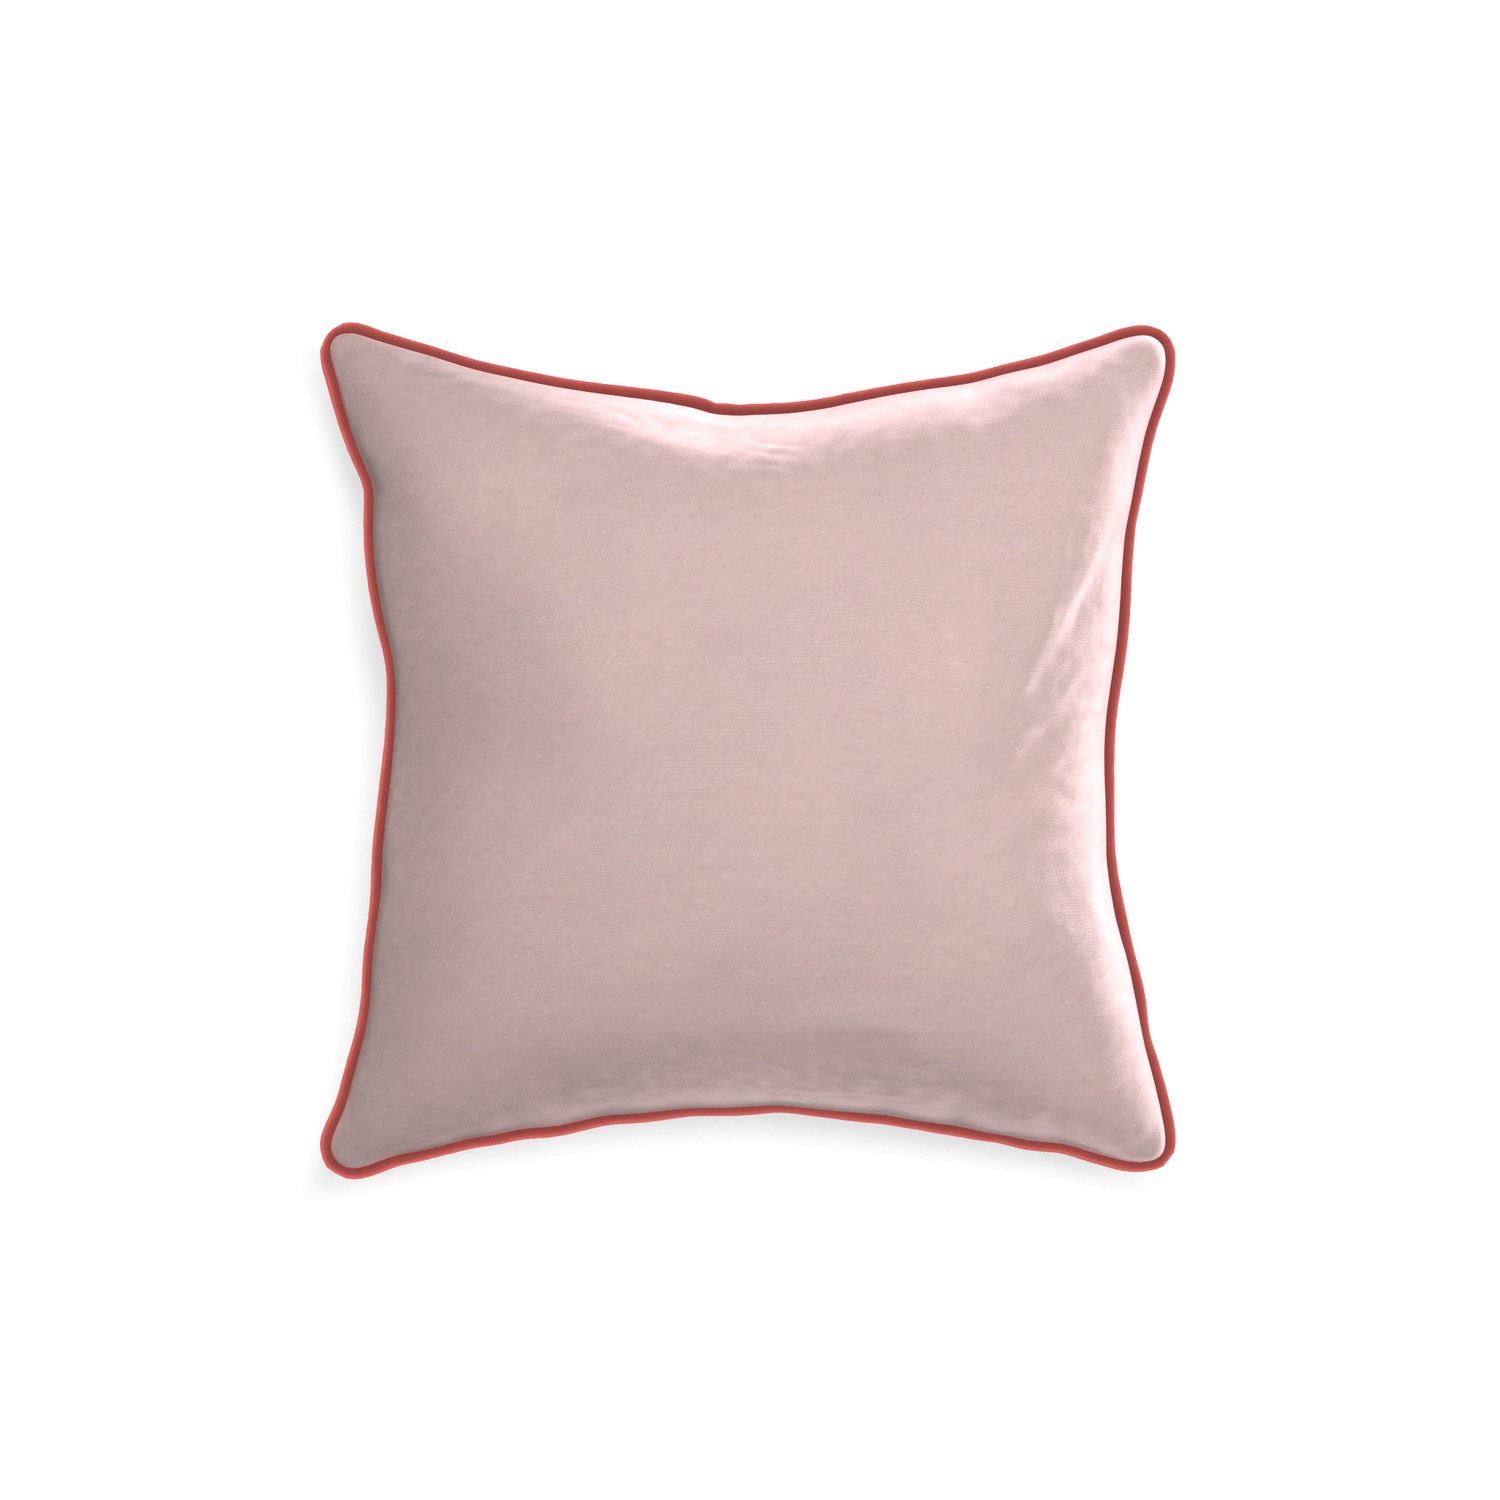 18-square rose velvet custom pillow with c piping on white background